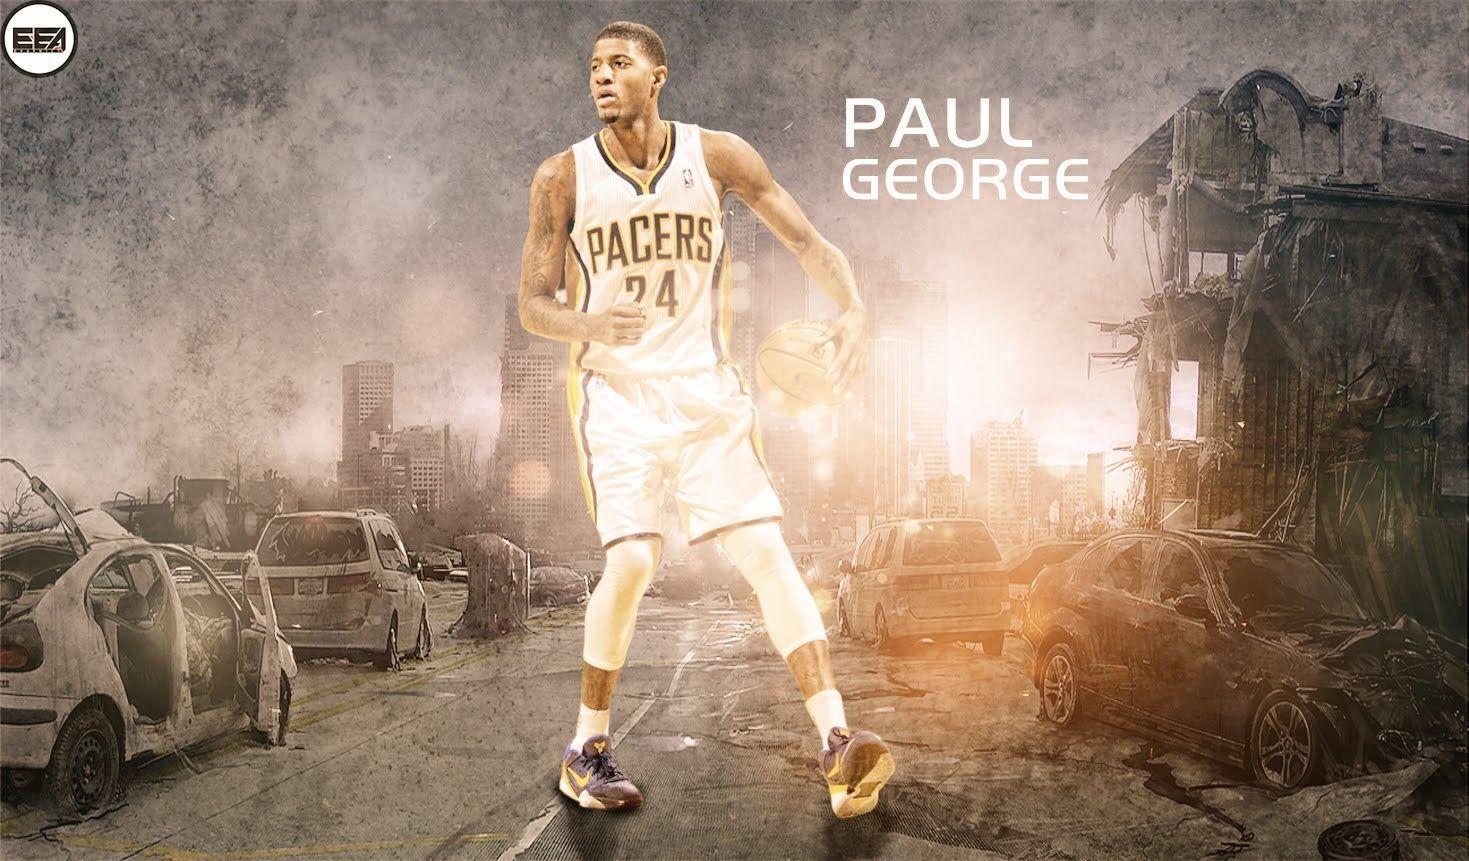 Paul George Mix (HD)